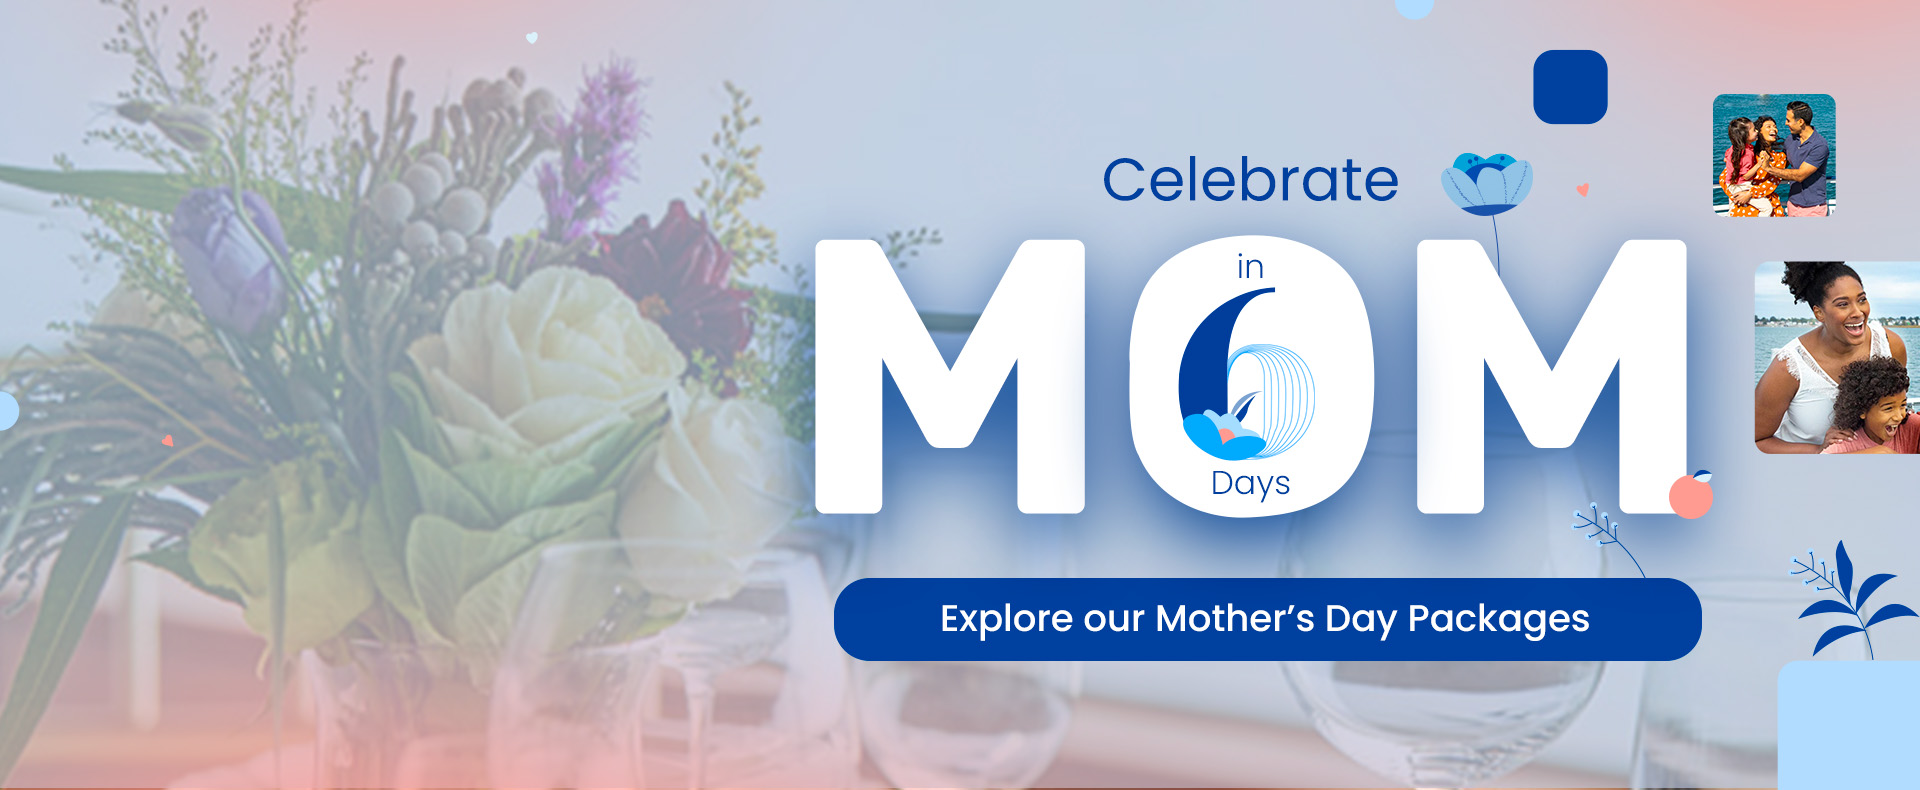 Newport Beach Mother’s Day countdown 6 days away